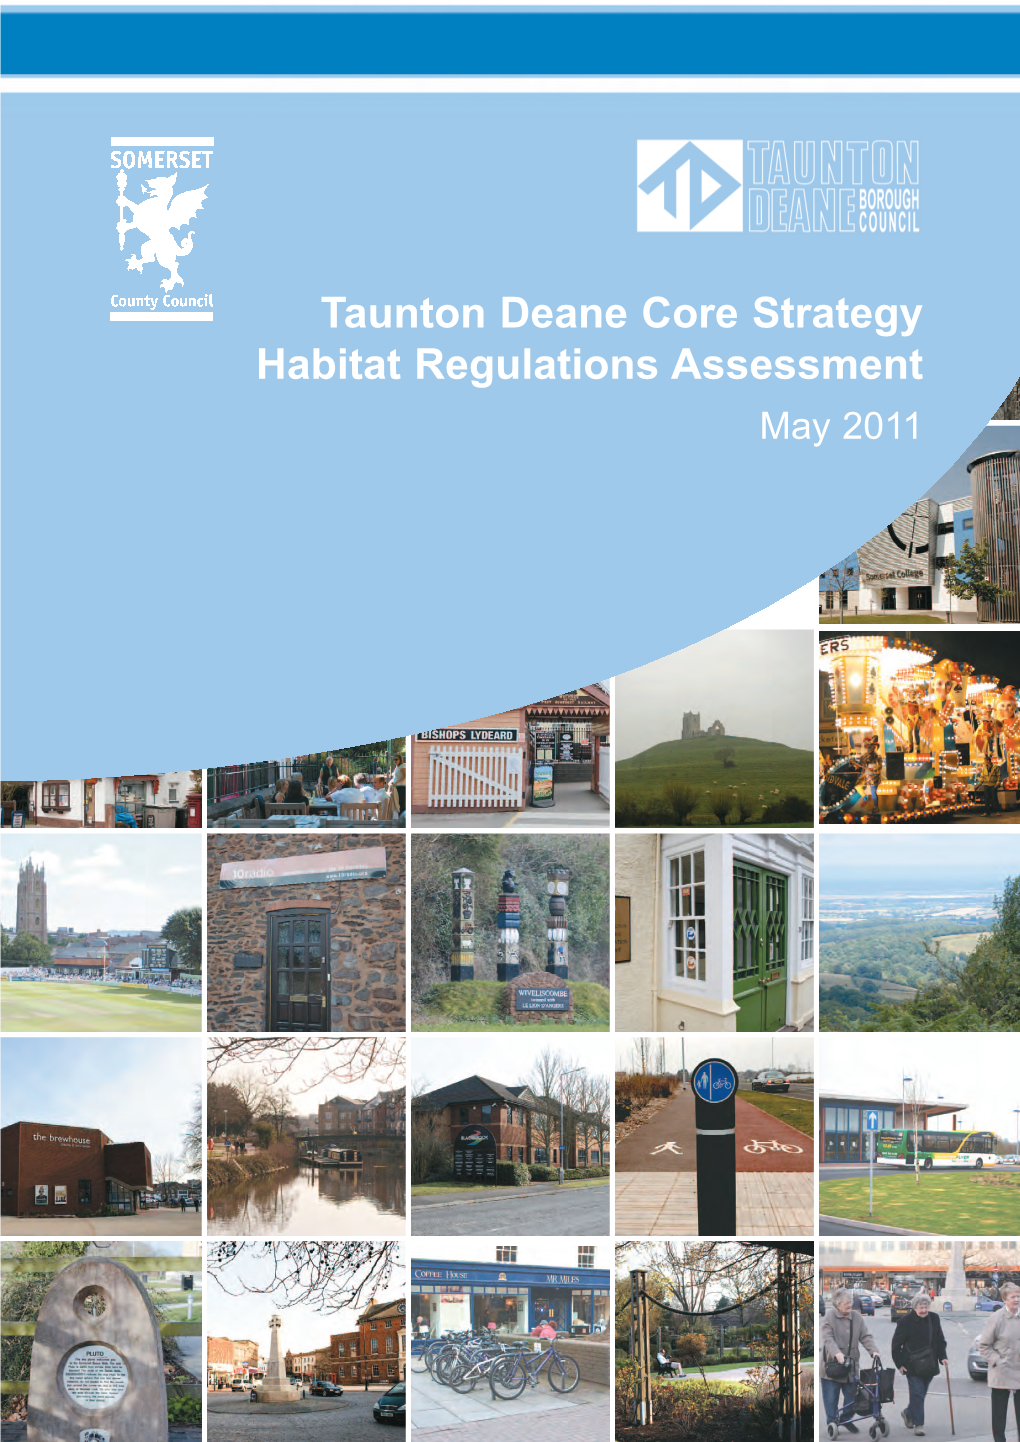 Taunton Deane Core Strategy Habitat Regulations Assessment 2011